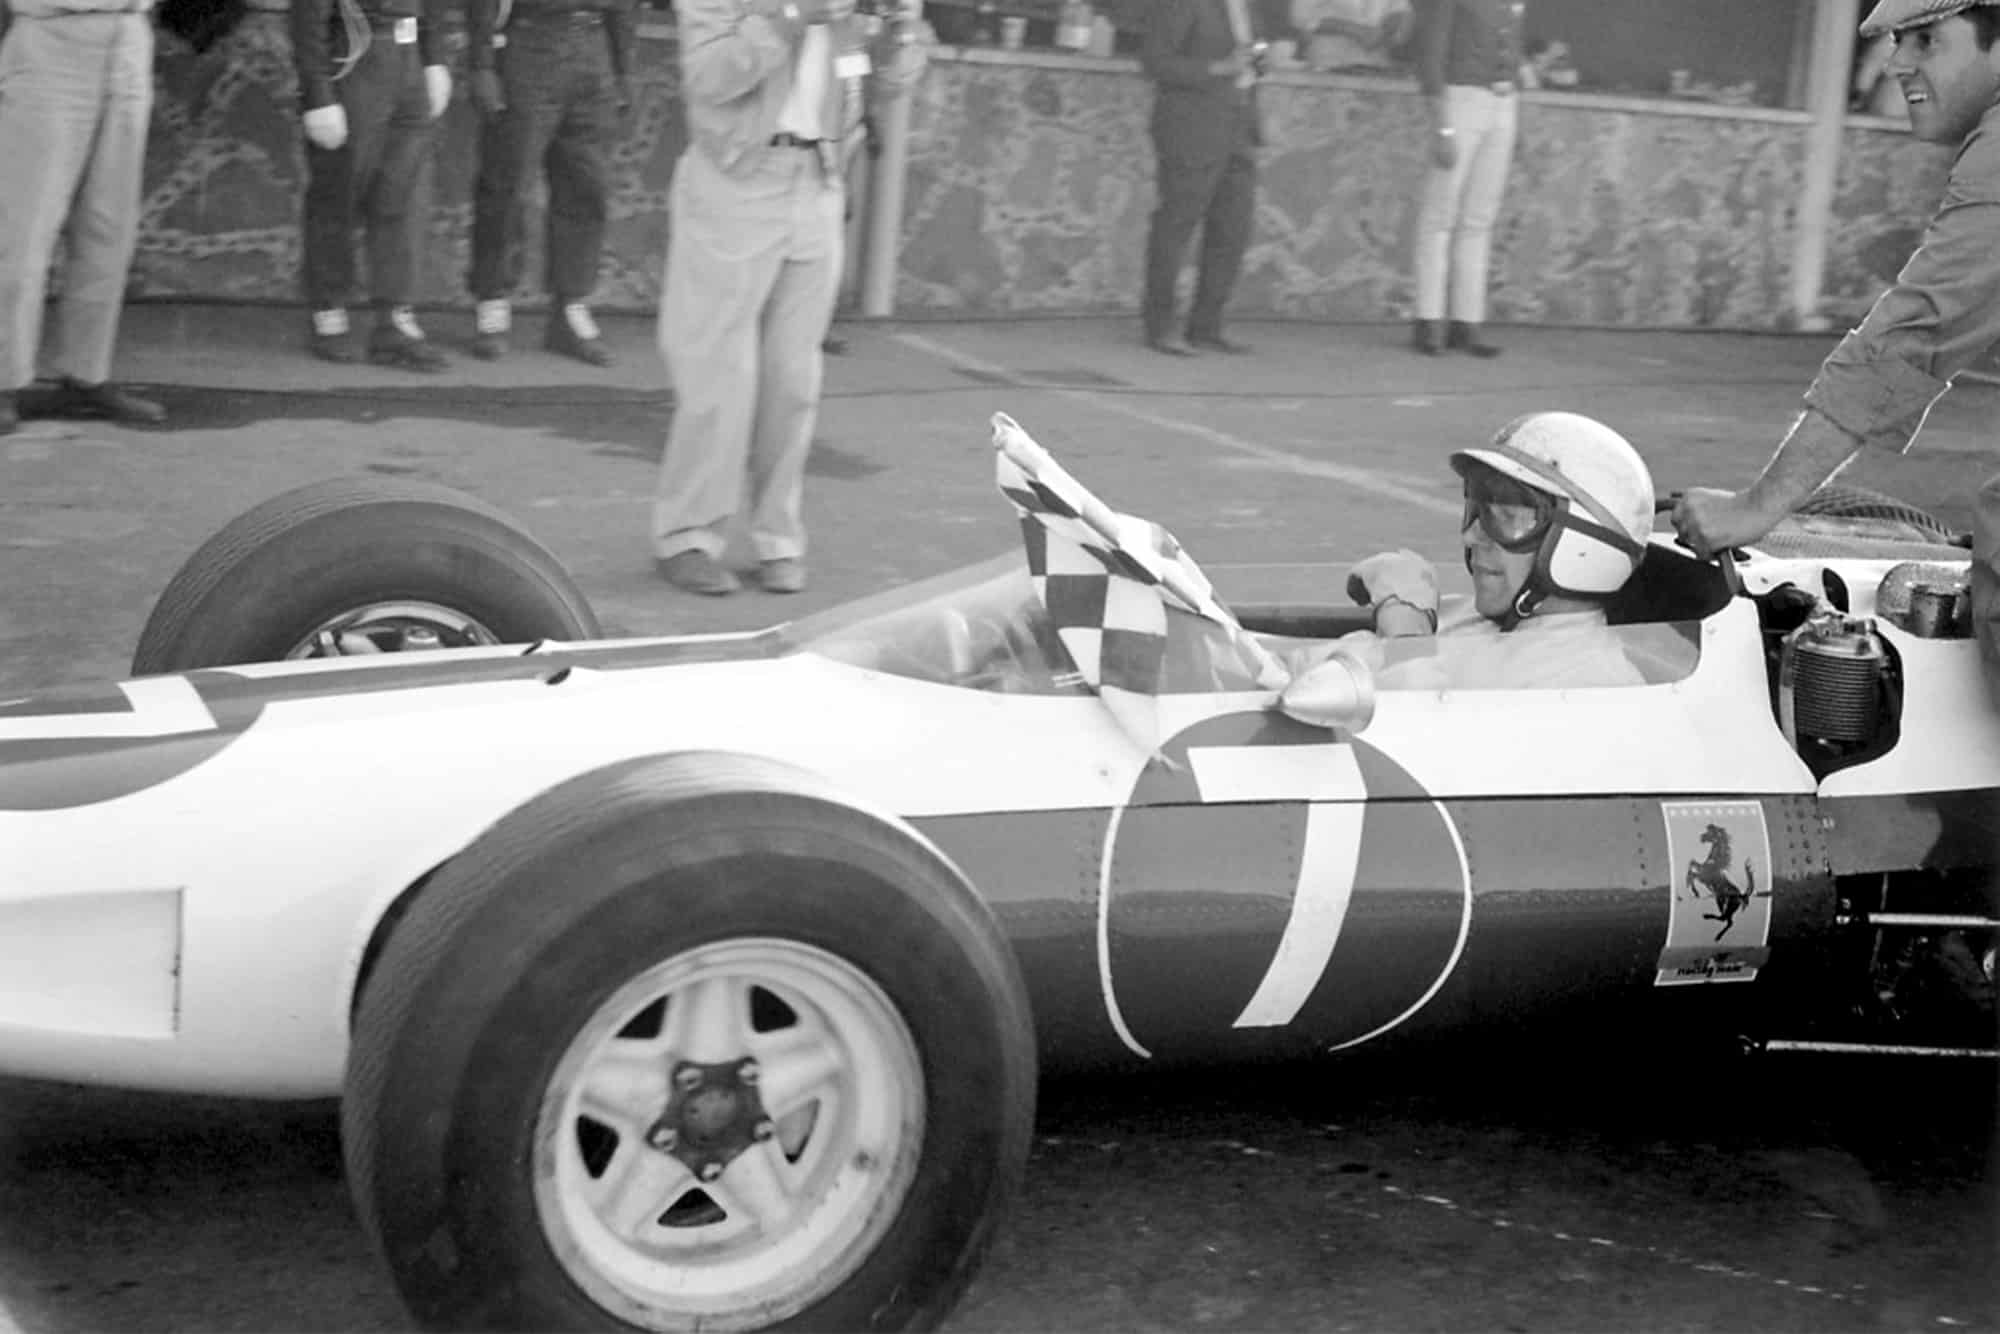 John Surtees after winning the 1964 Formula 1 world championship